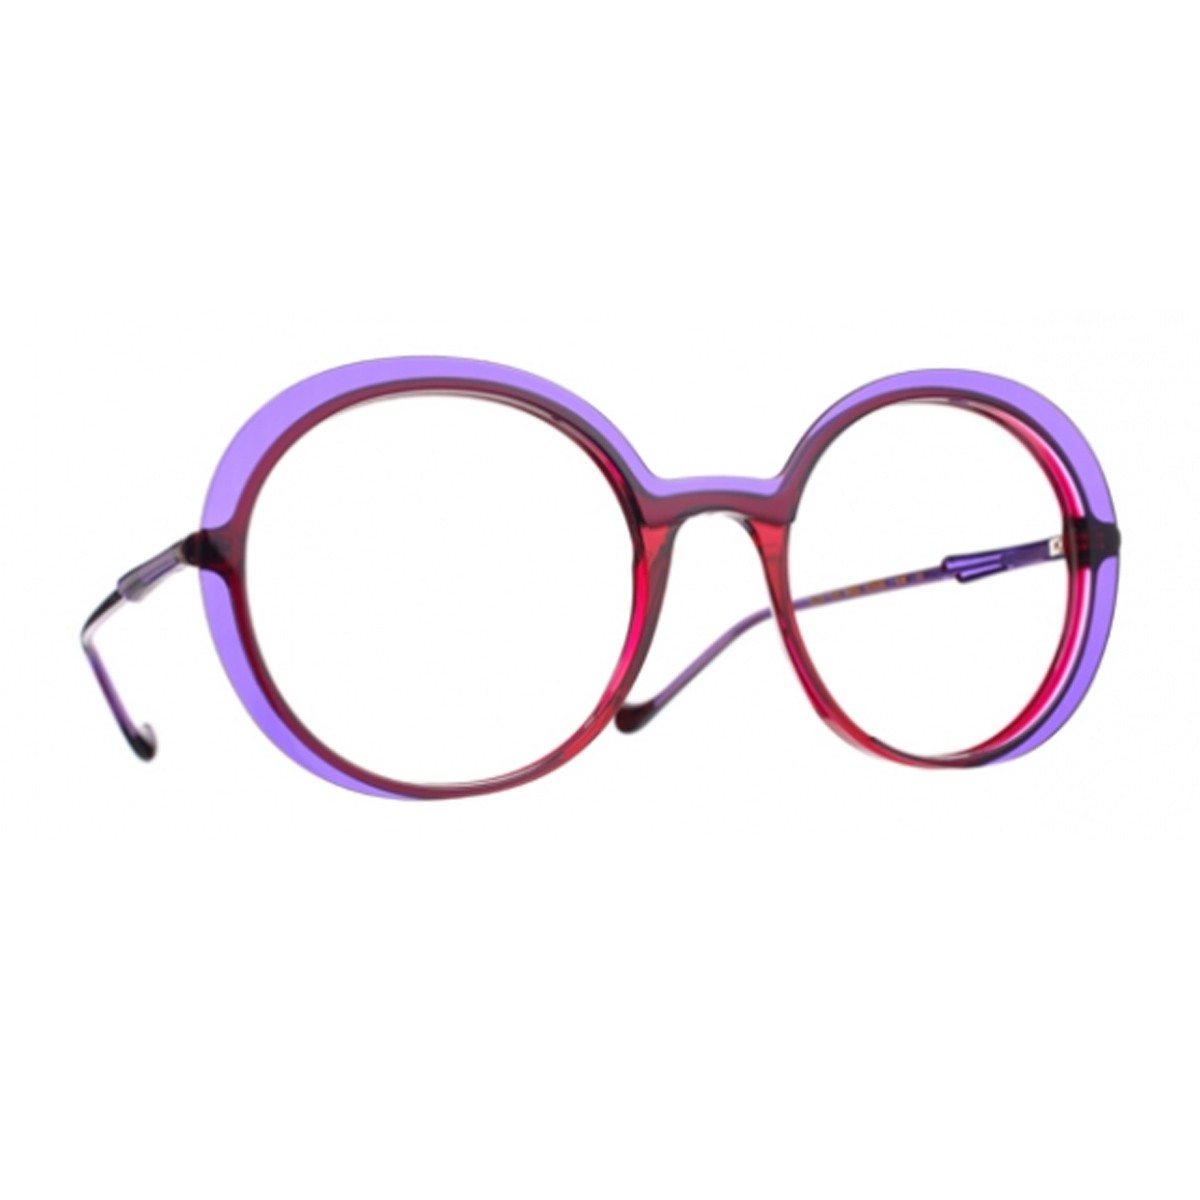 Caroline Abram Ella | Women's eyeglasses